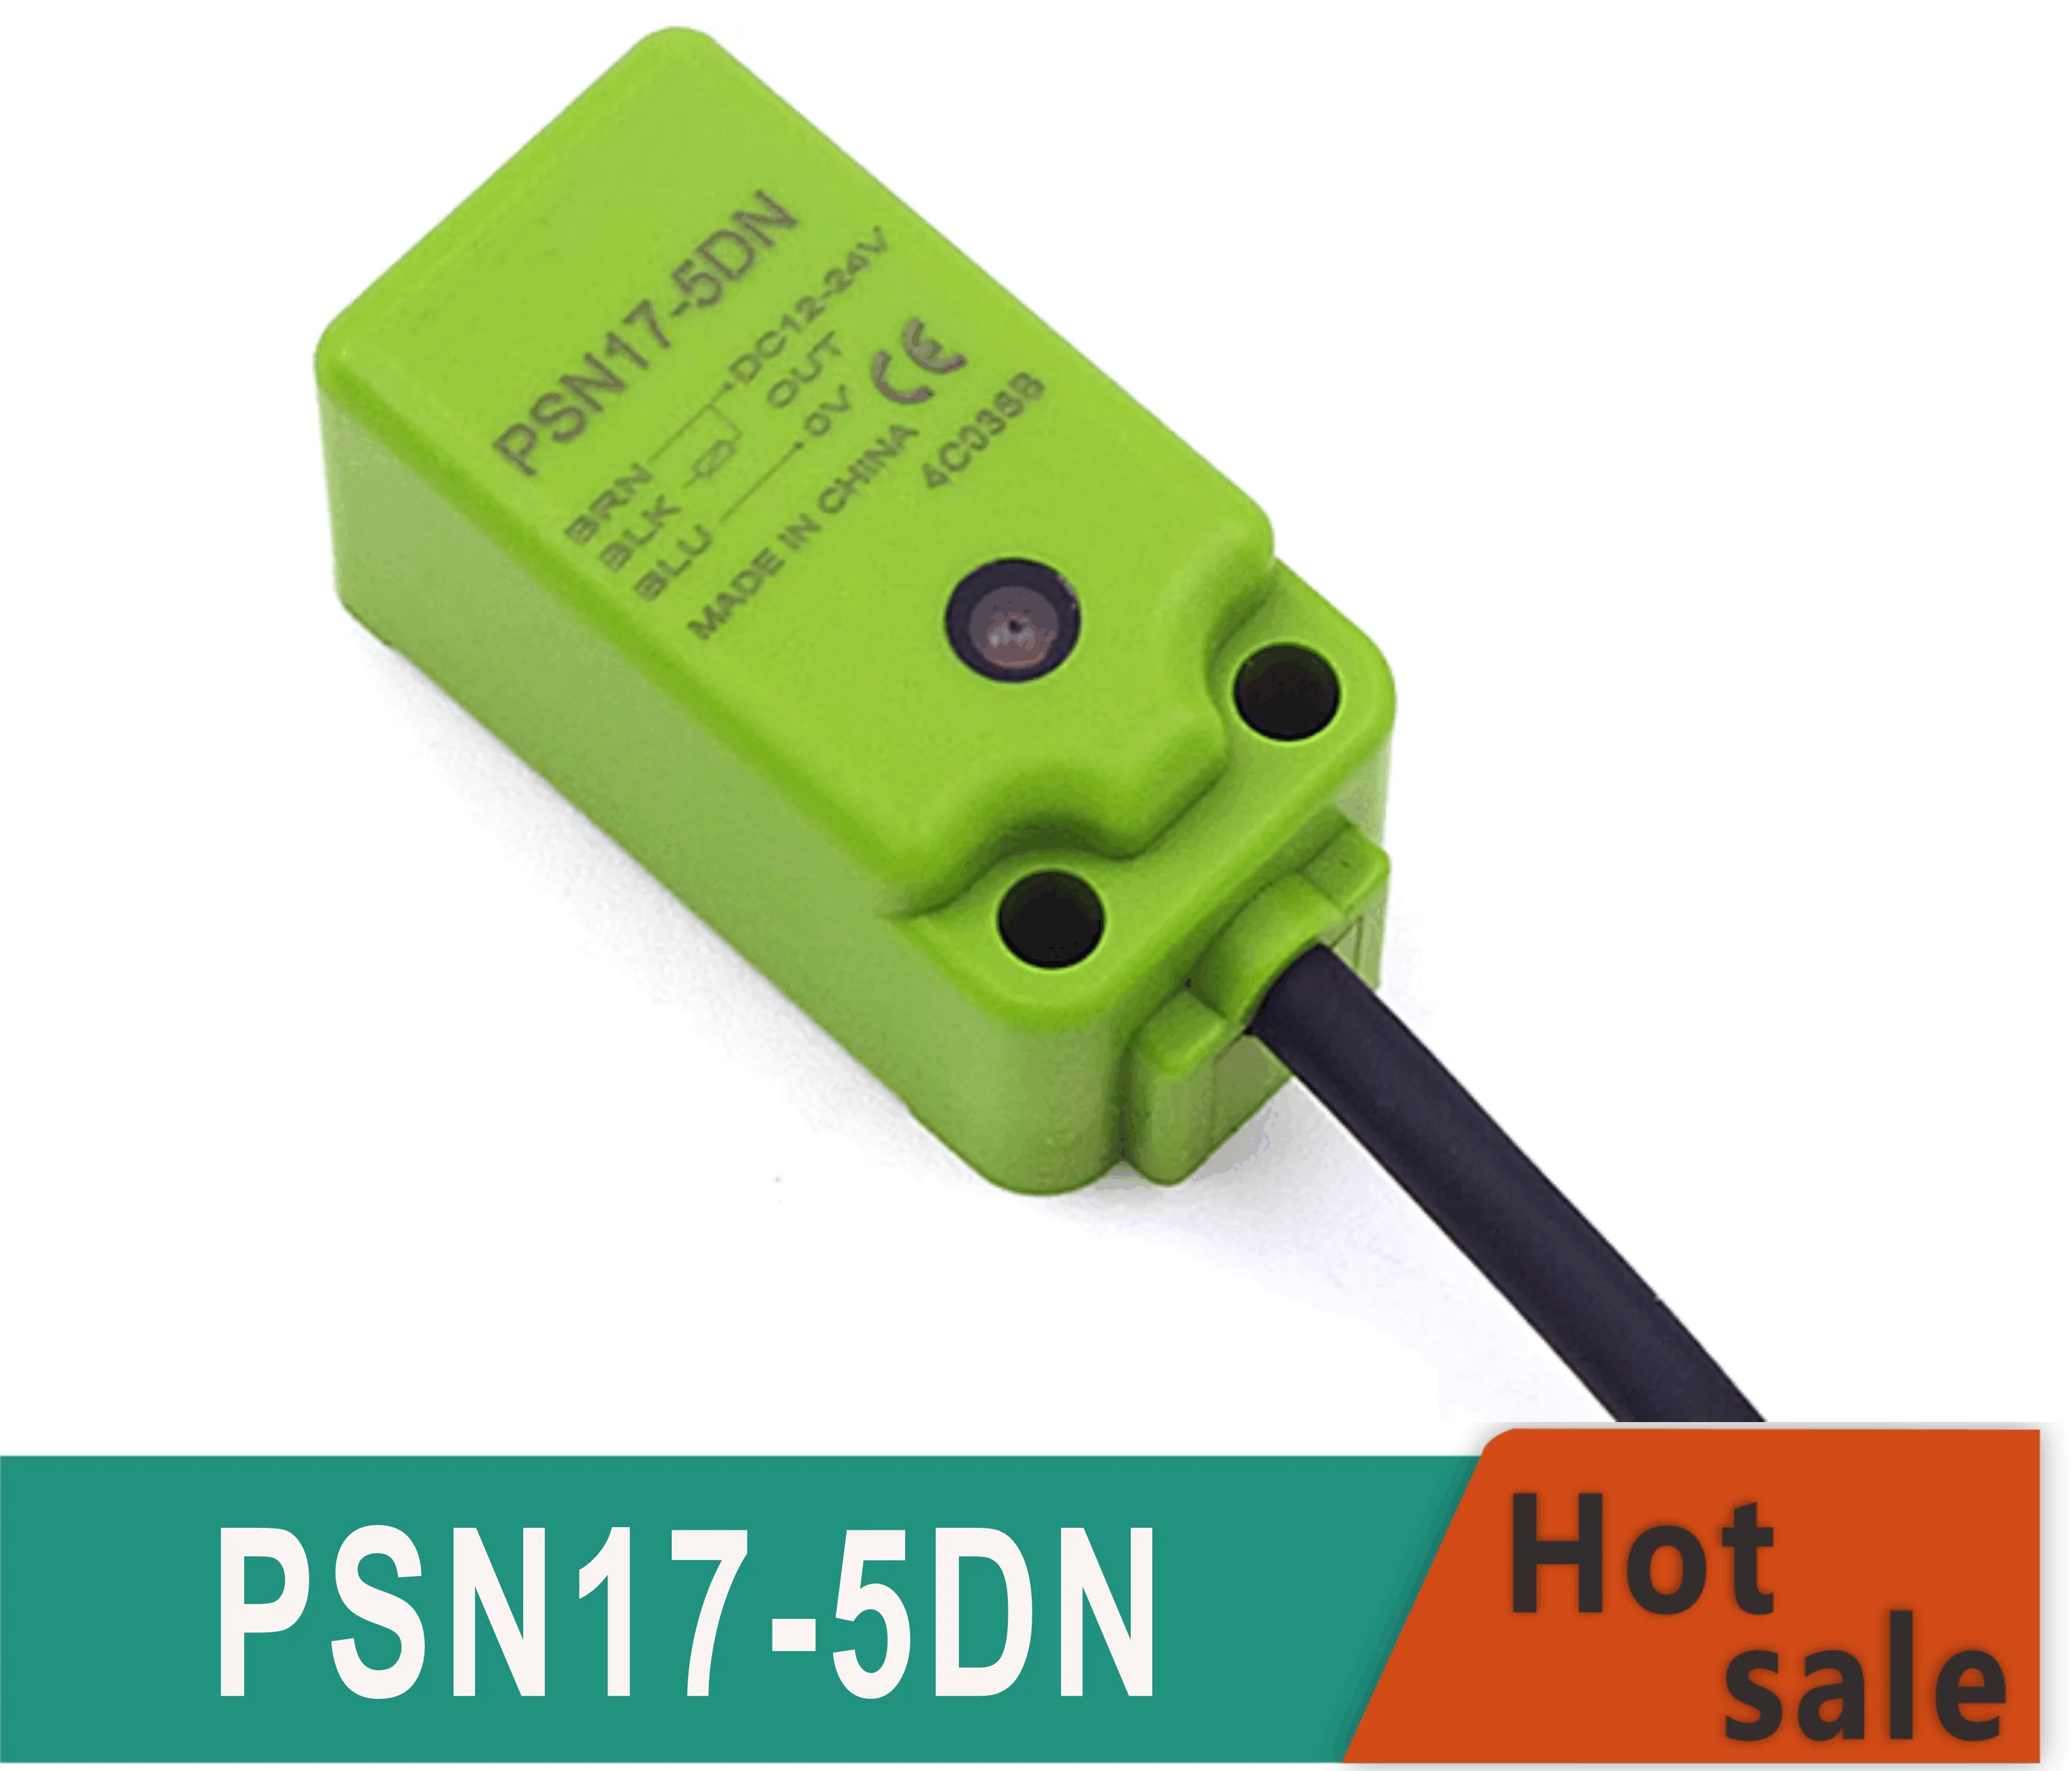 PSN17-8DN PSN17-8DP PSN17-5DN PSN17-5DP 100% חדש & מקורי קרבה מתג חיישן